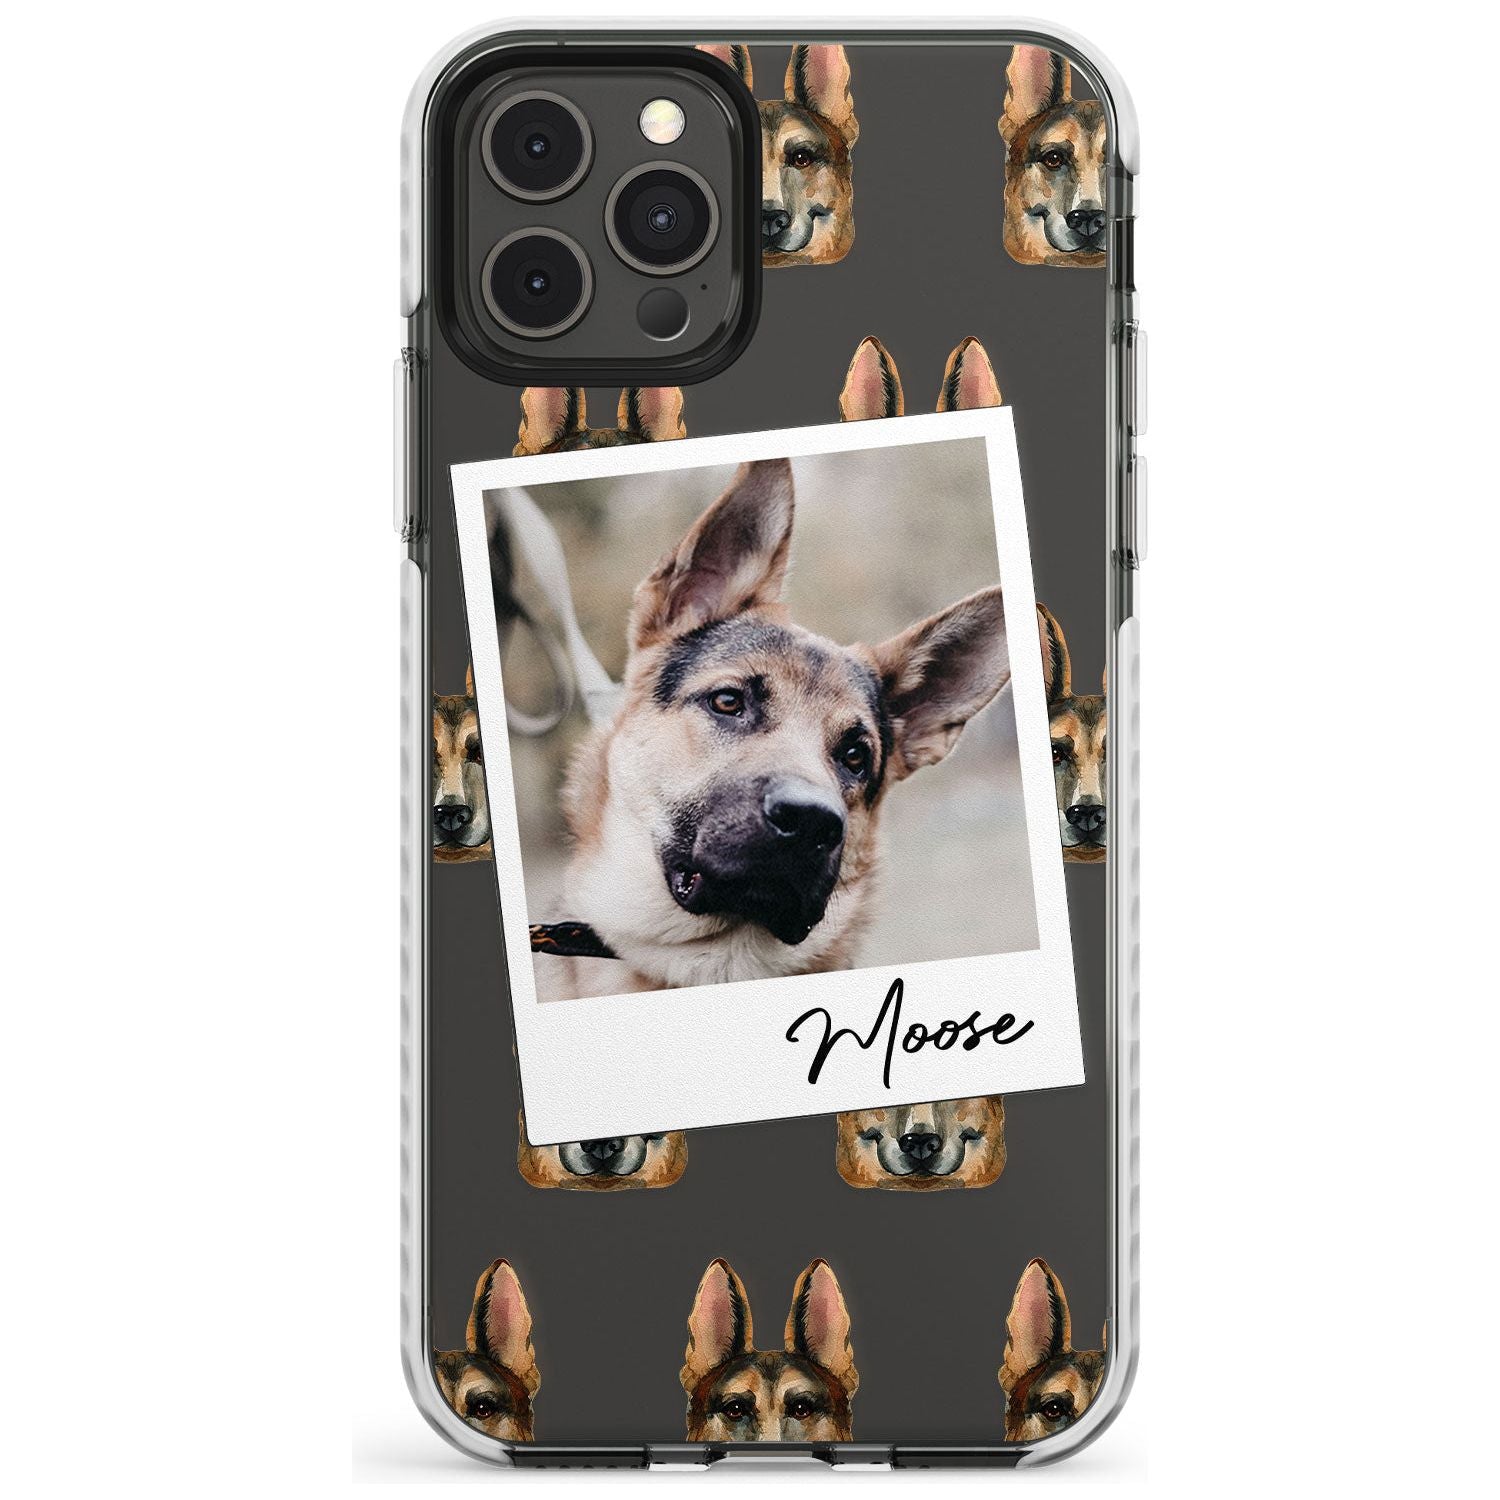 German Shepherd - Custom Dog Photo Slim TPU Phone Case for iPhone 11 Pro Max